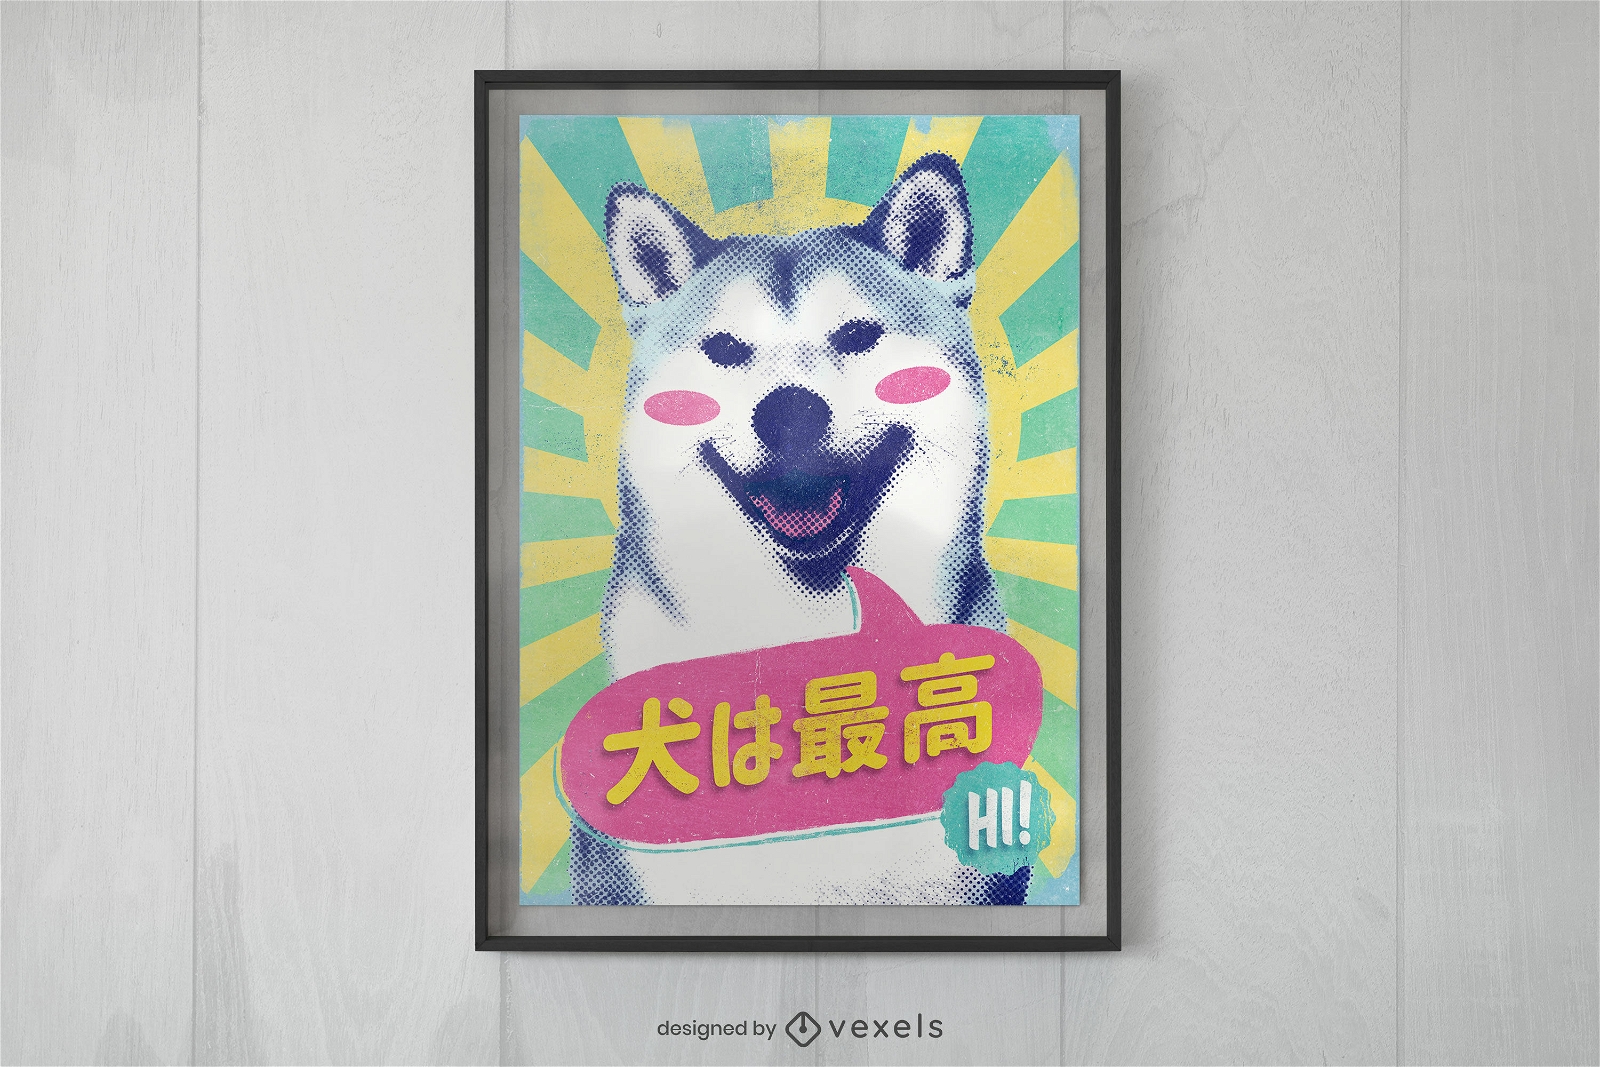 Firendly shiba dog poster design